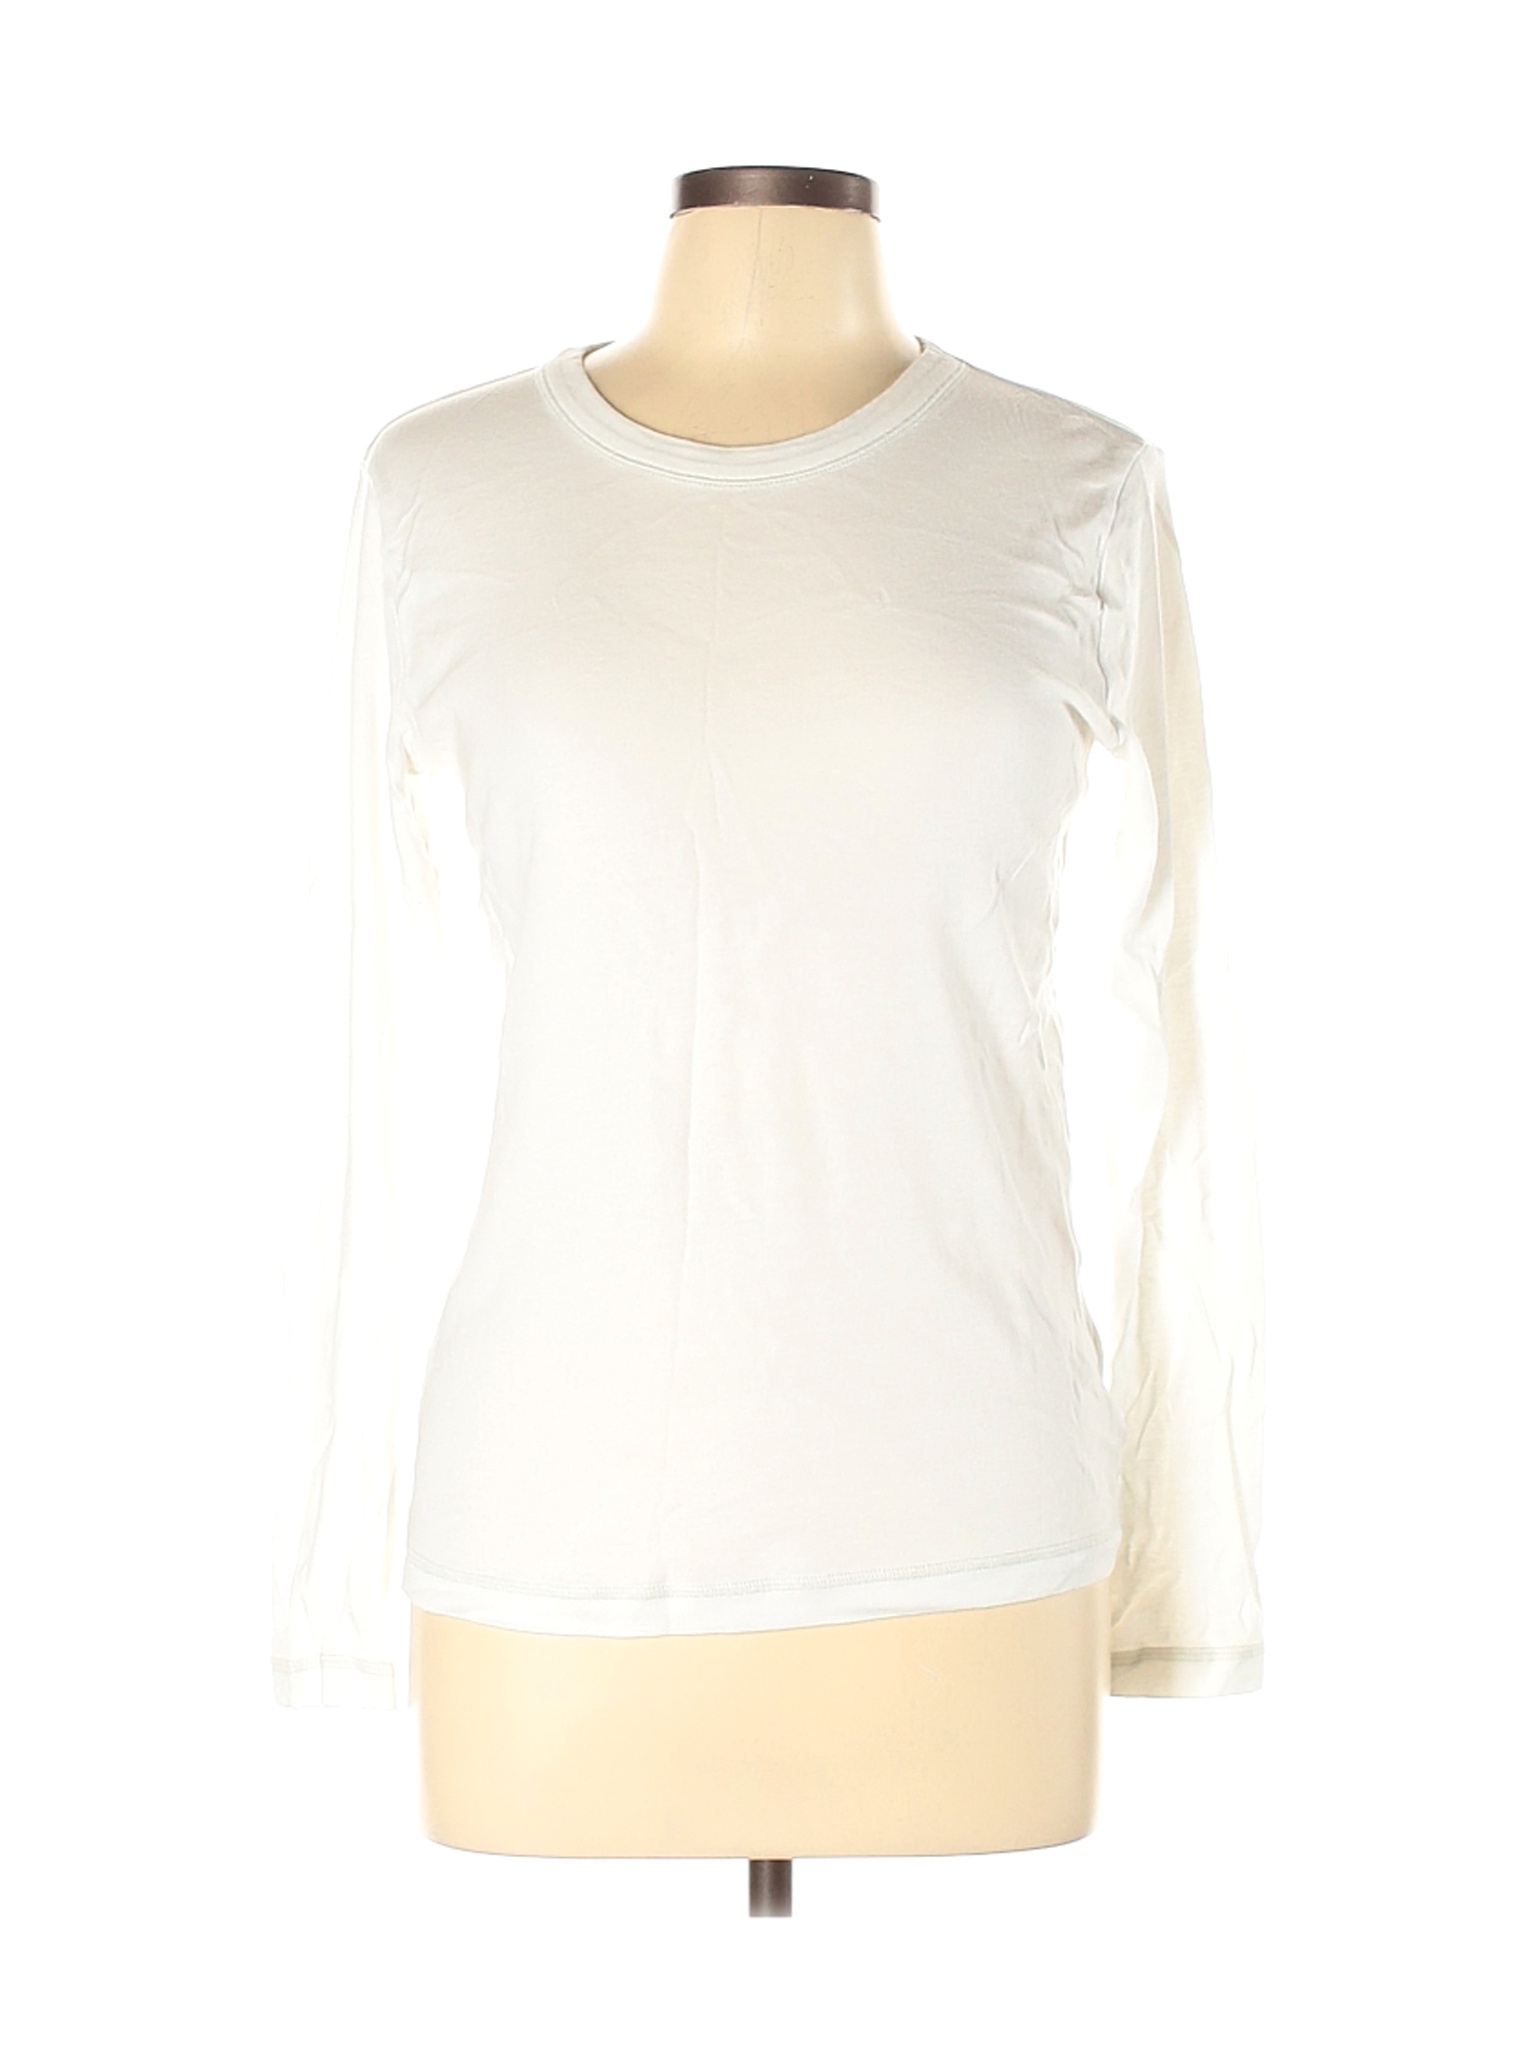 Gap Women White Long Sleeve T-Shirt L | eBay